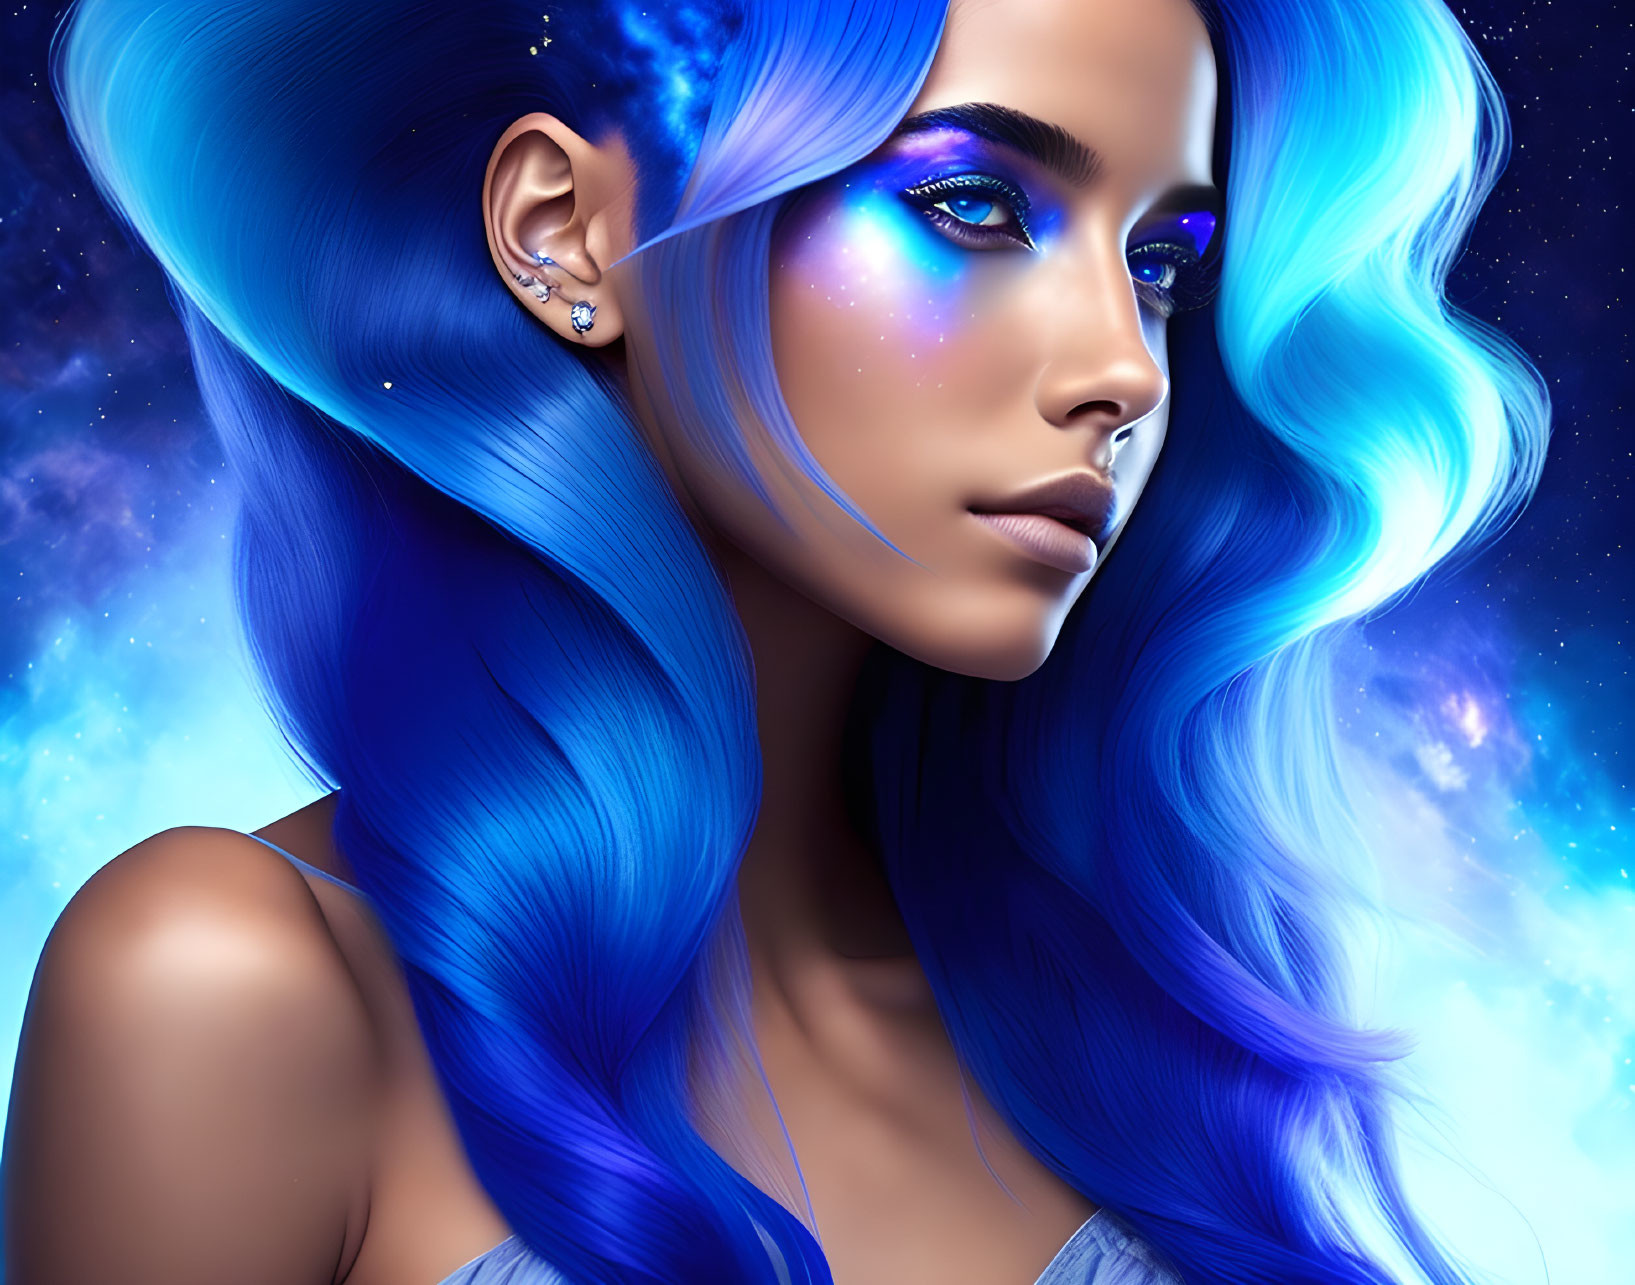 Digital Artwork: Woman with Blue Hair & Galaxy Makeup